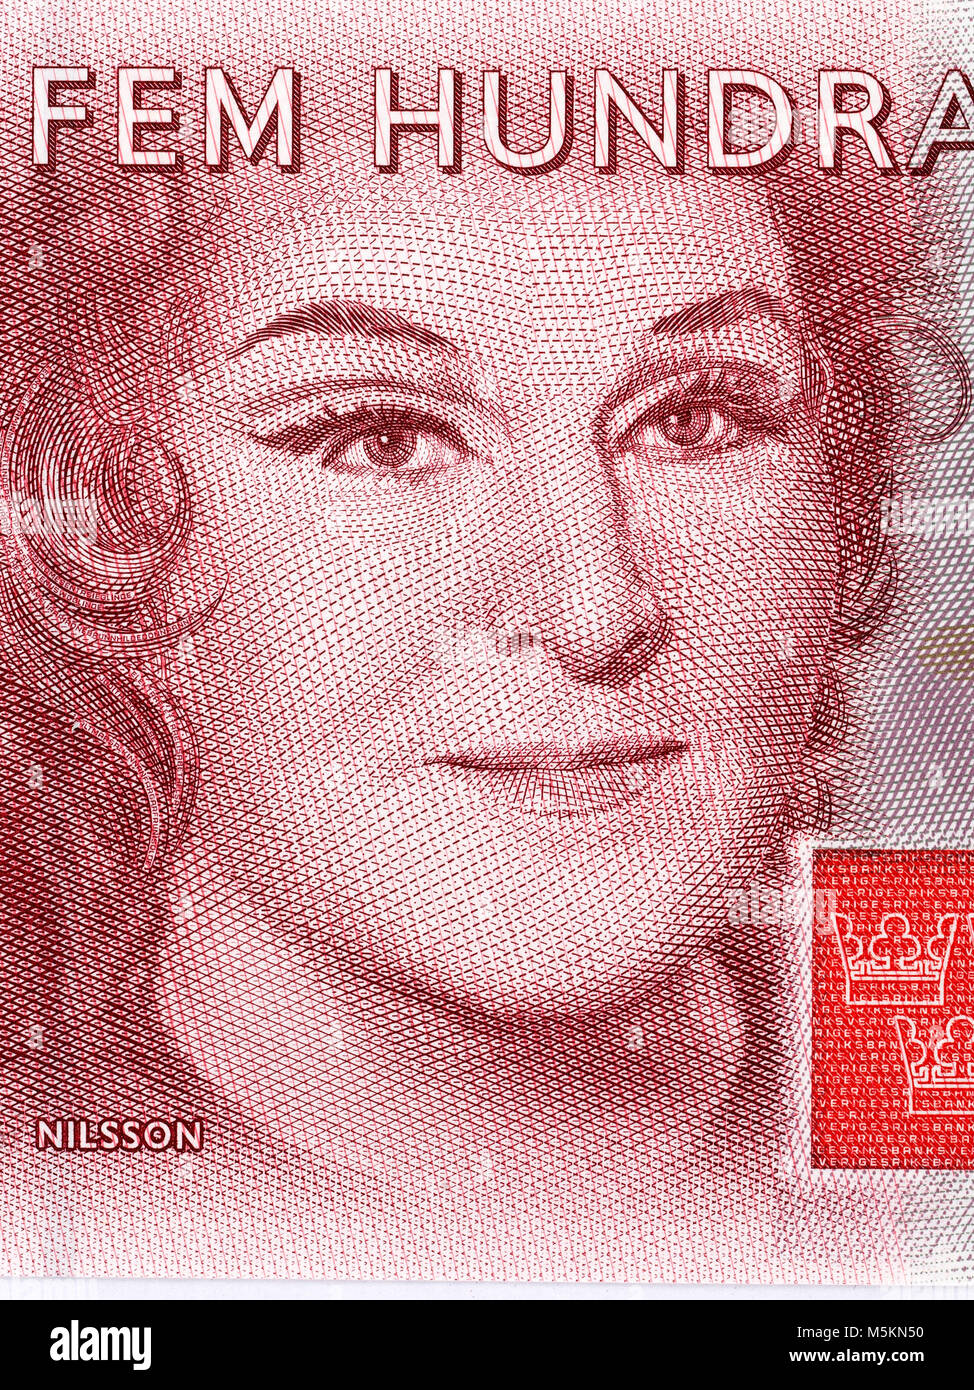 Birgit Nilsson portrait from Swedish money Stock Photo